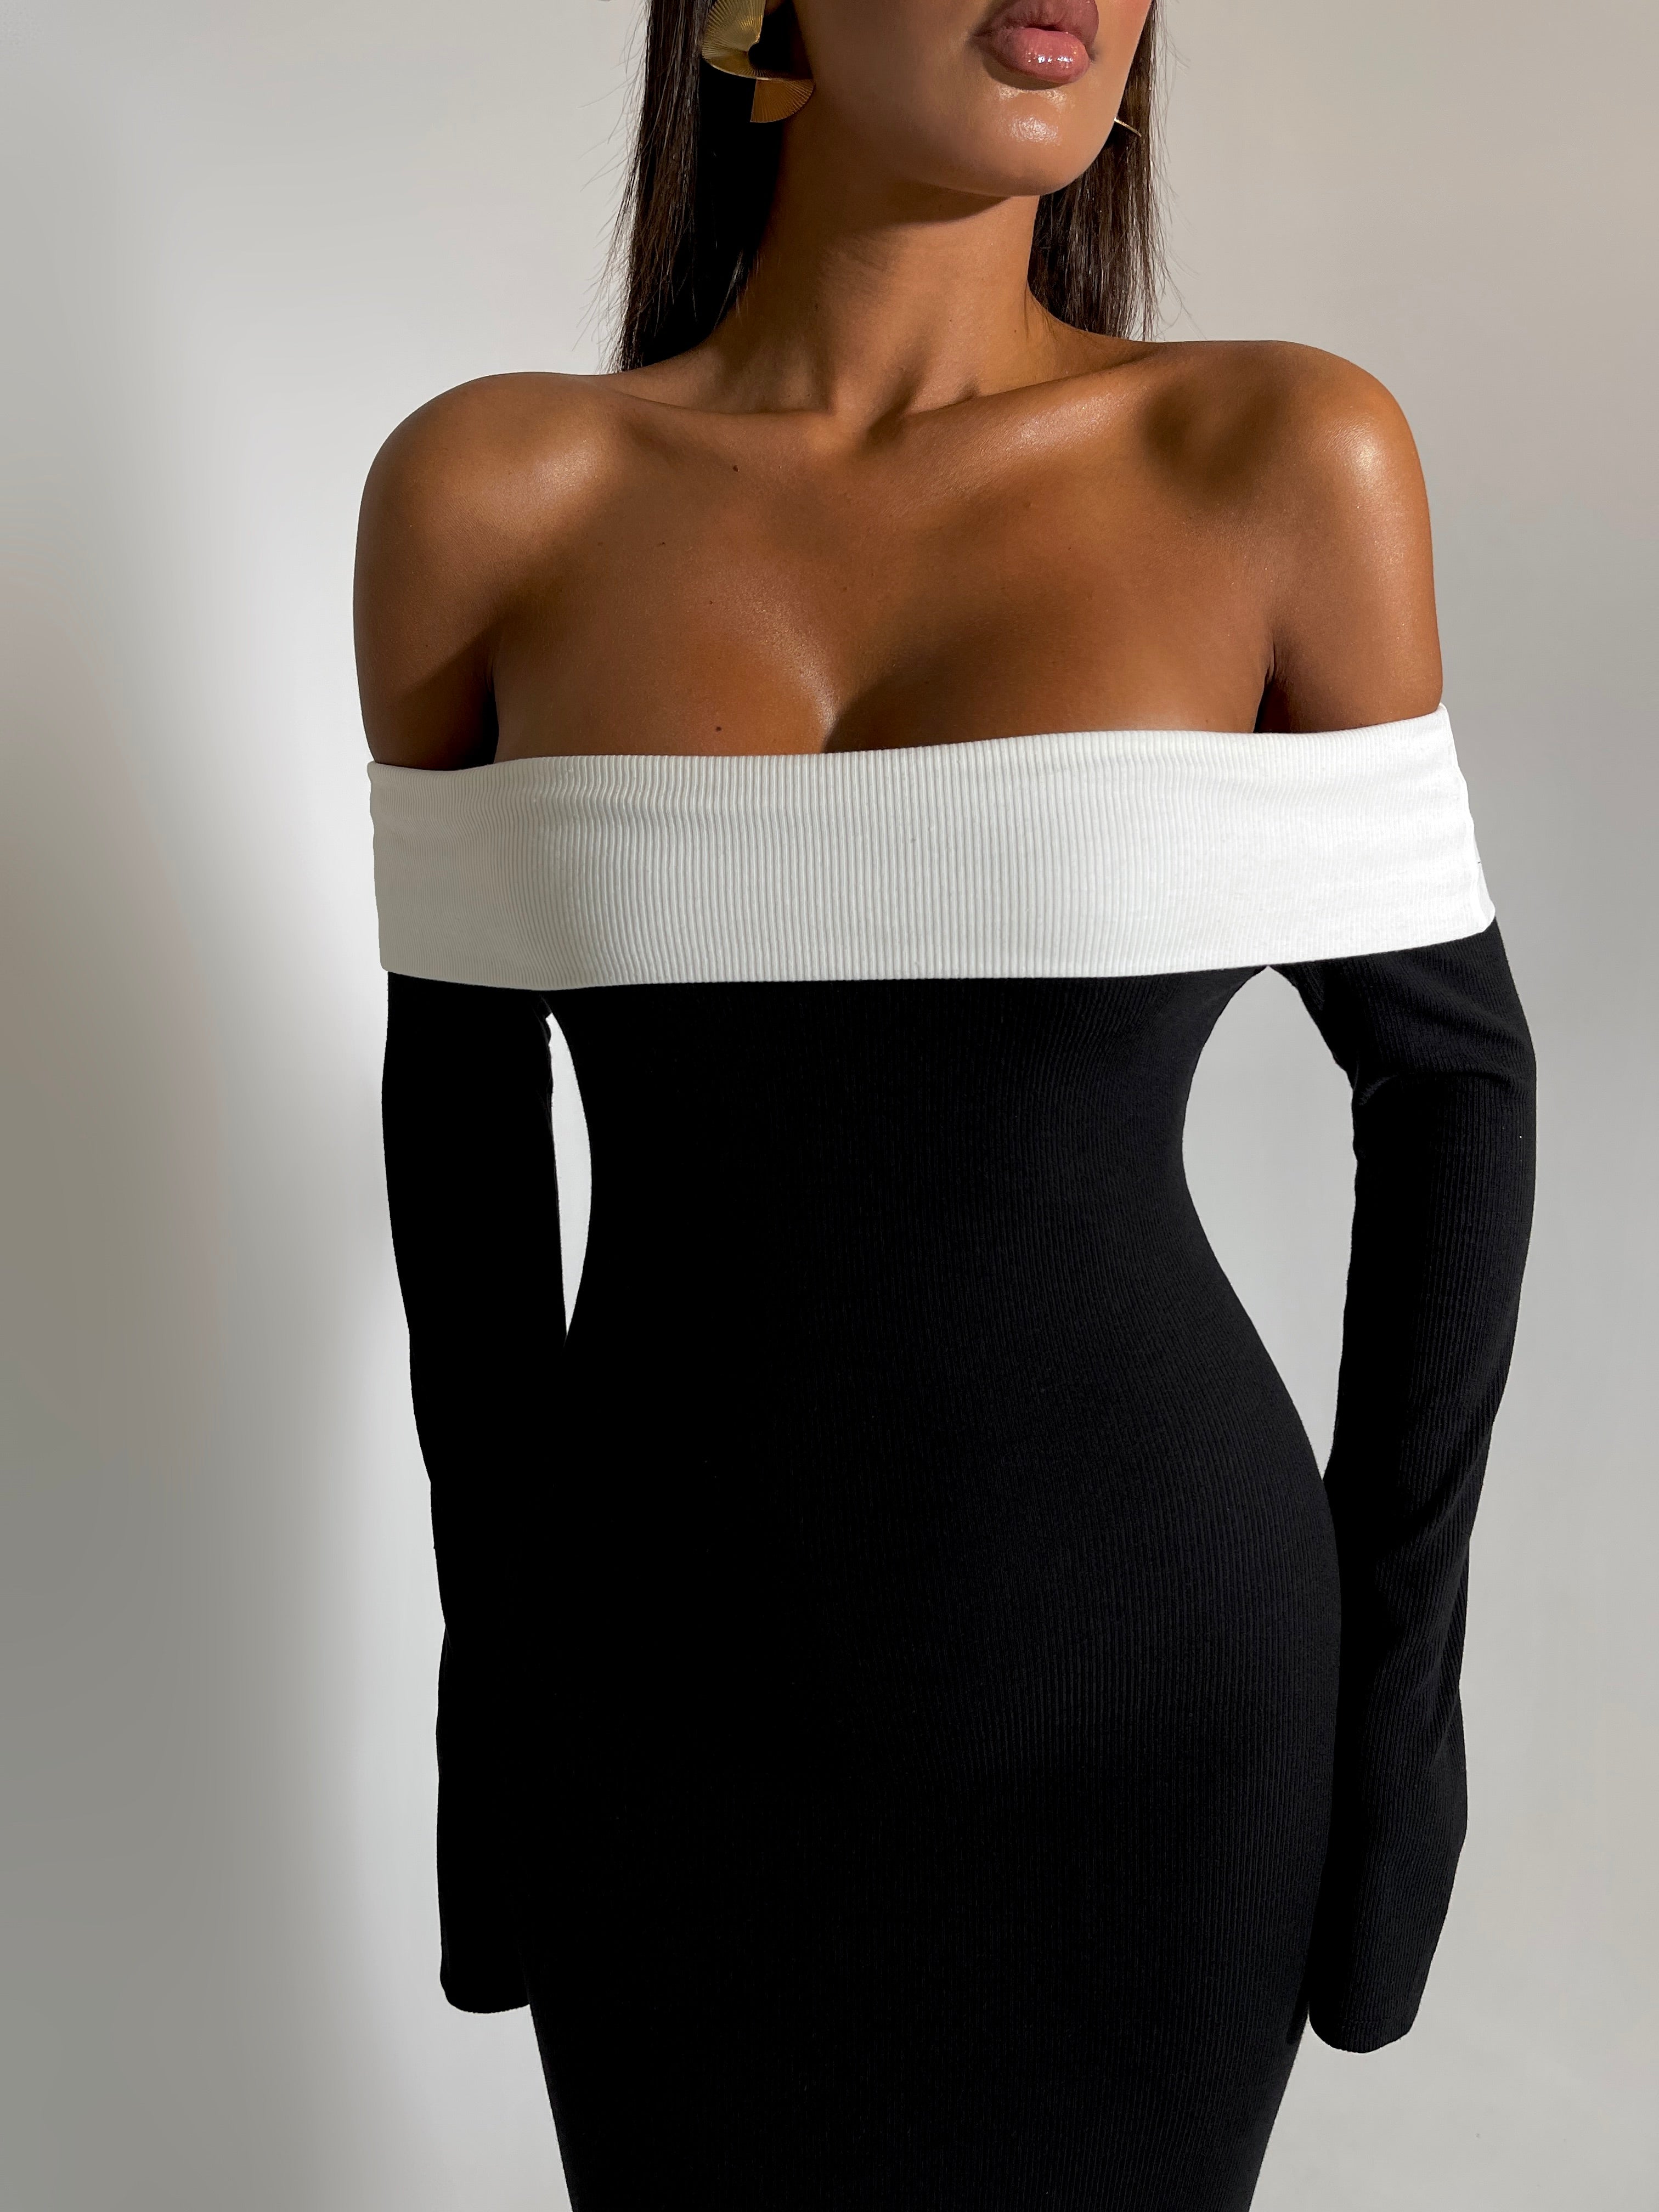 Alessia Black White Dress